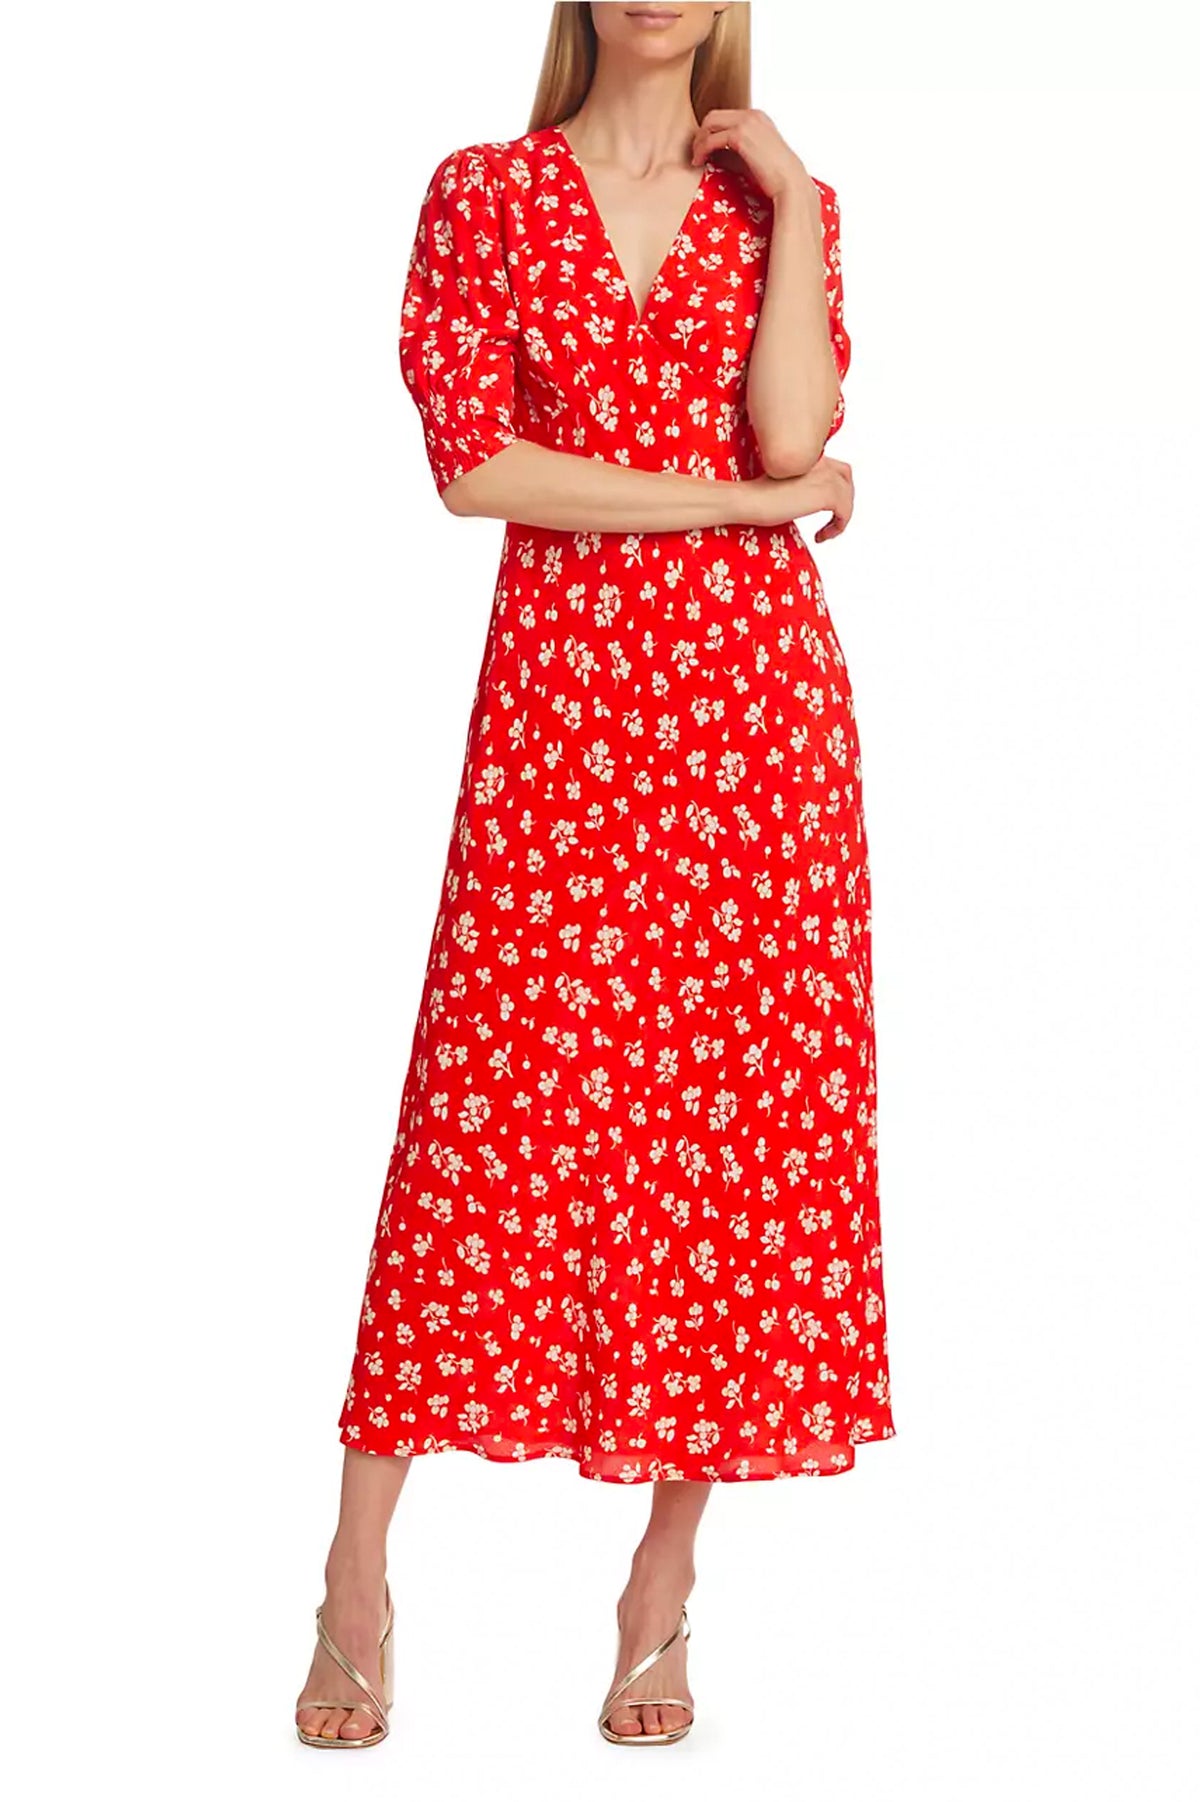 Zadie Dress in Easy Floral Red